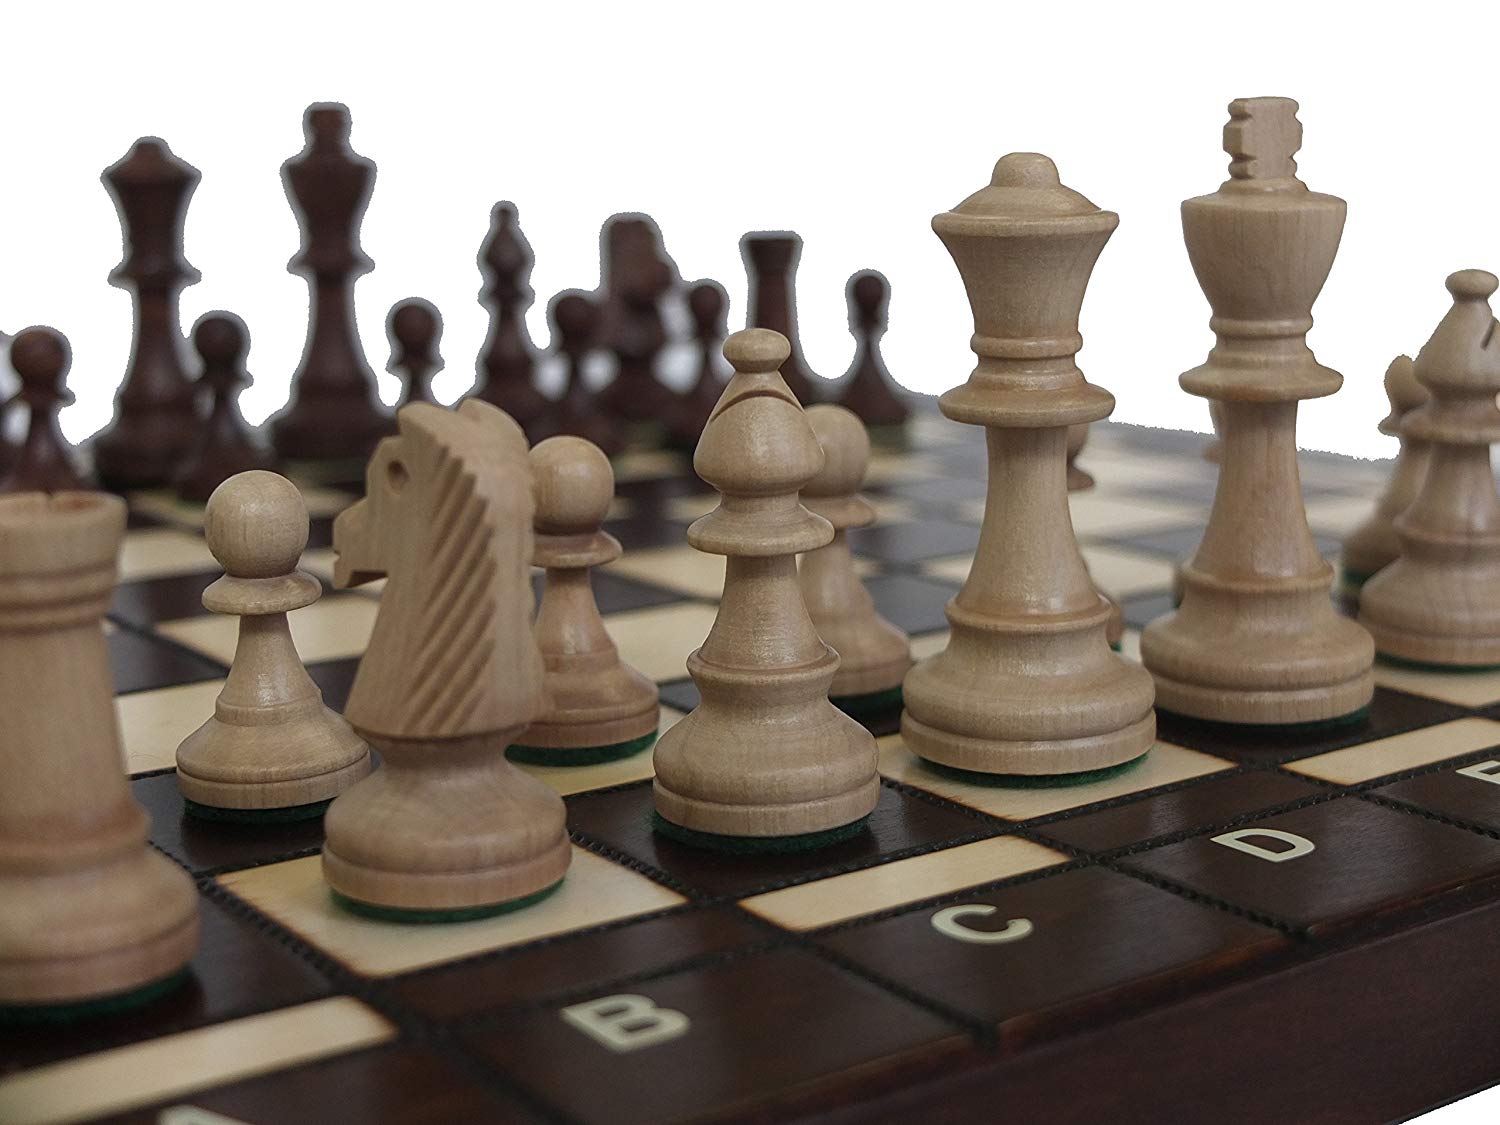 Aprender a jugar al ajedrez. se mueven las fichas?